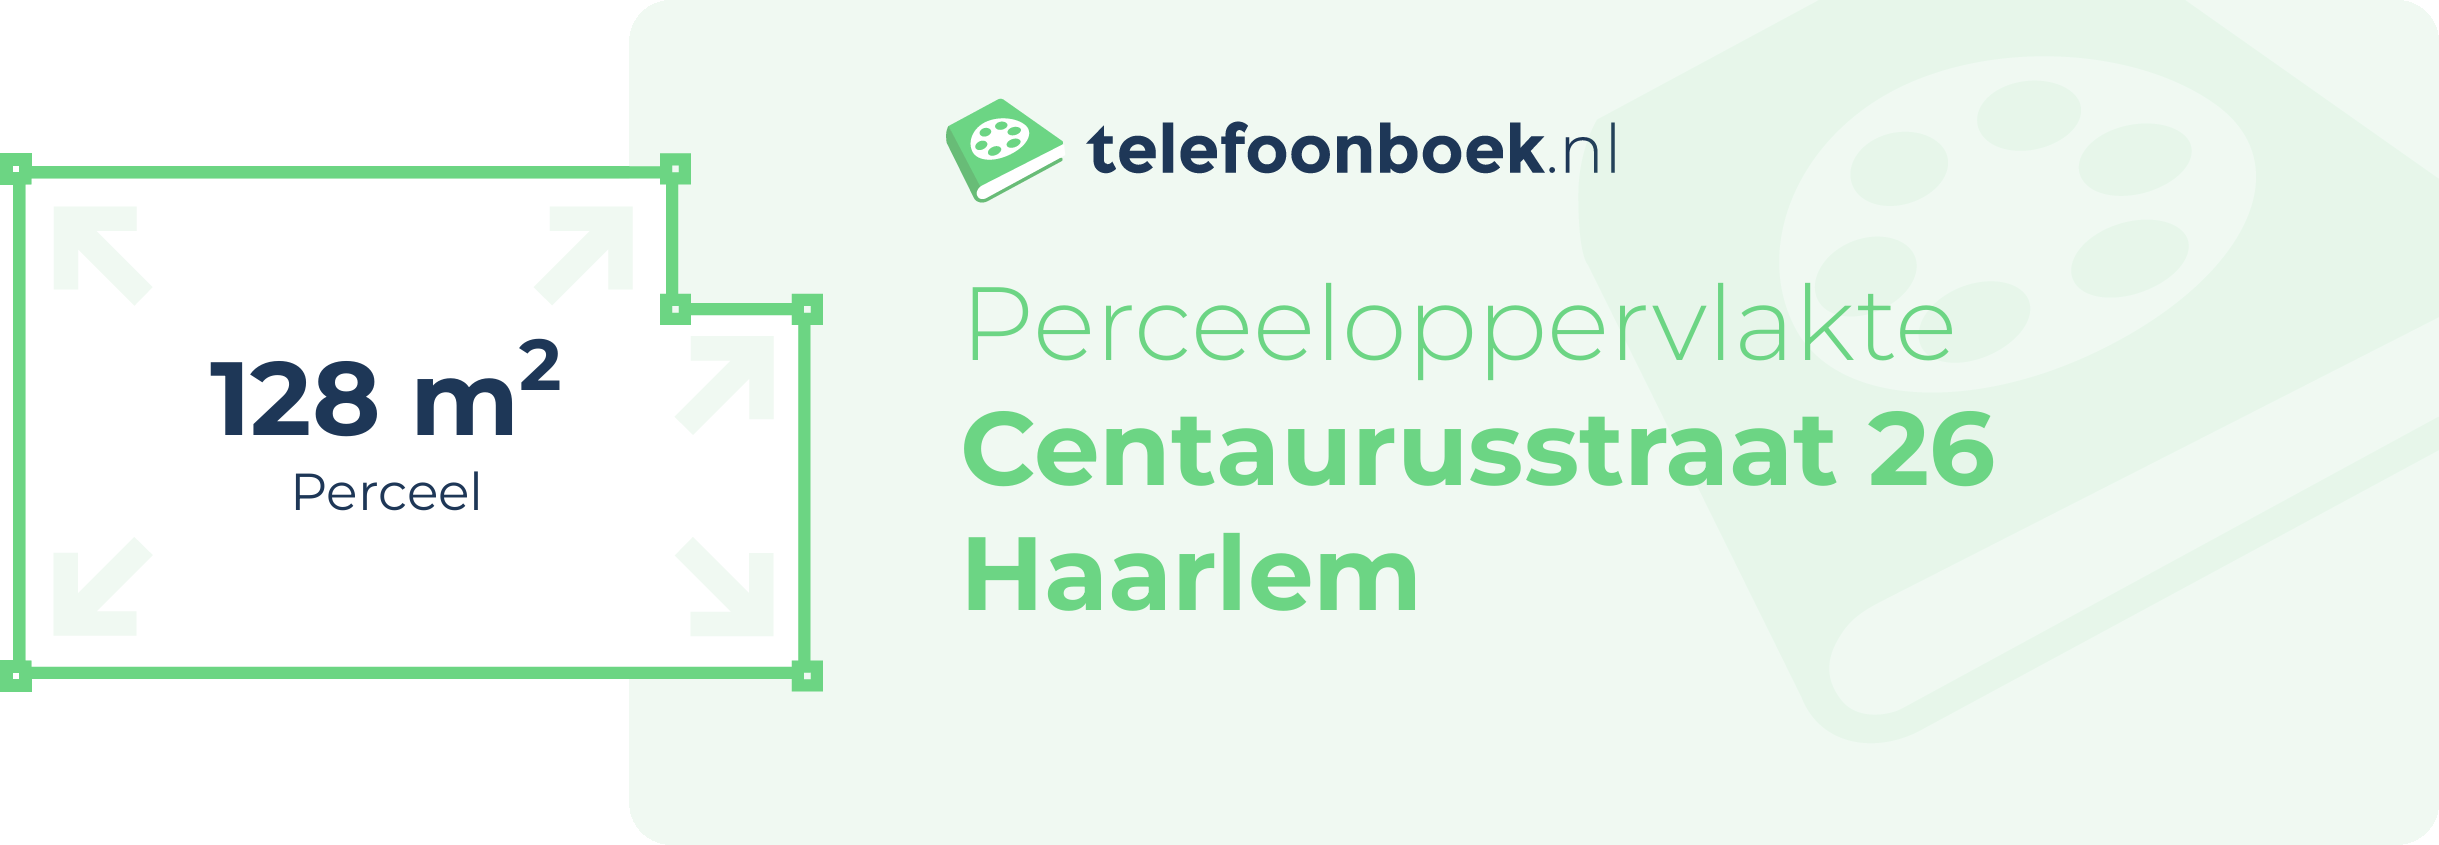 Perceeloppervlakte Centaurusstraat 26 Haarlem